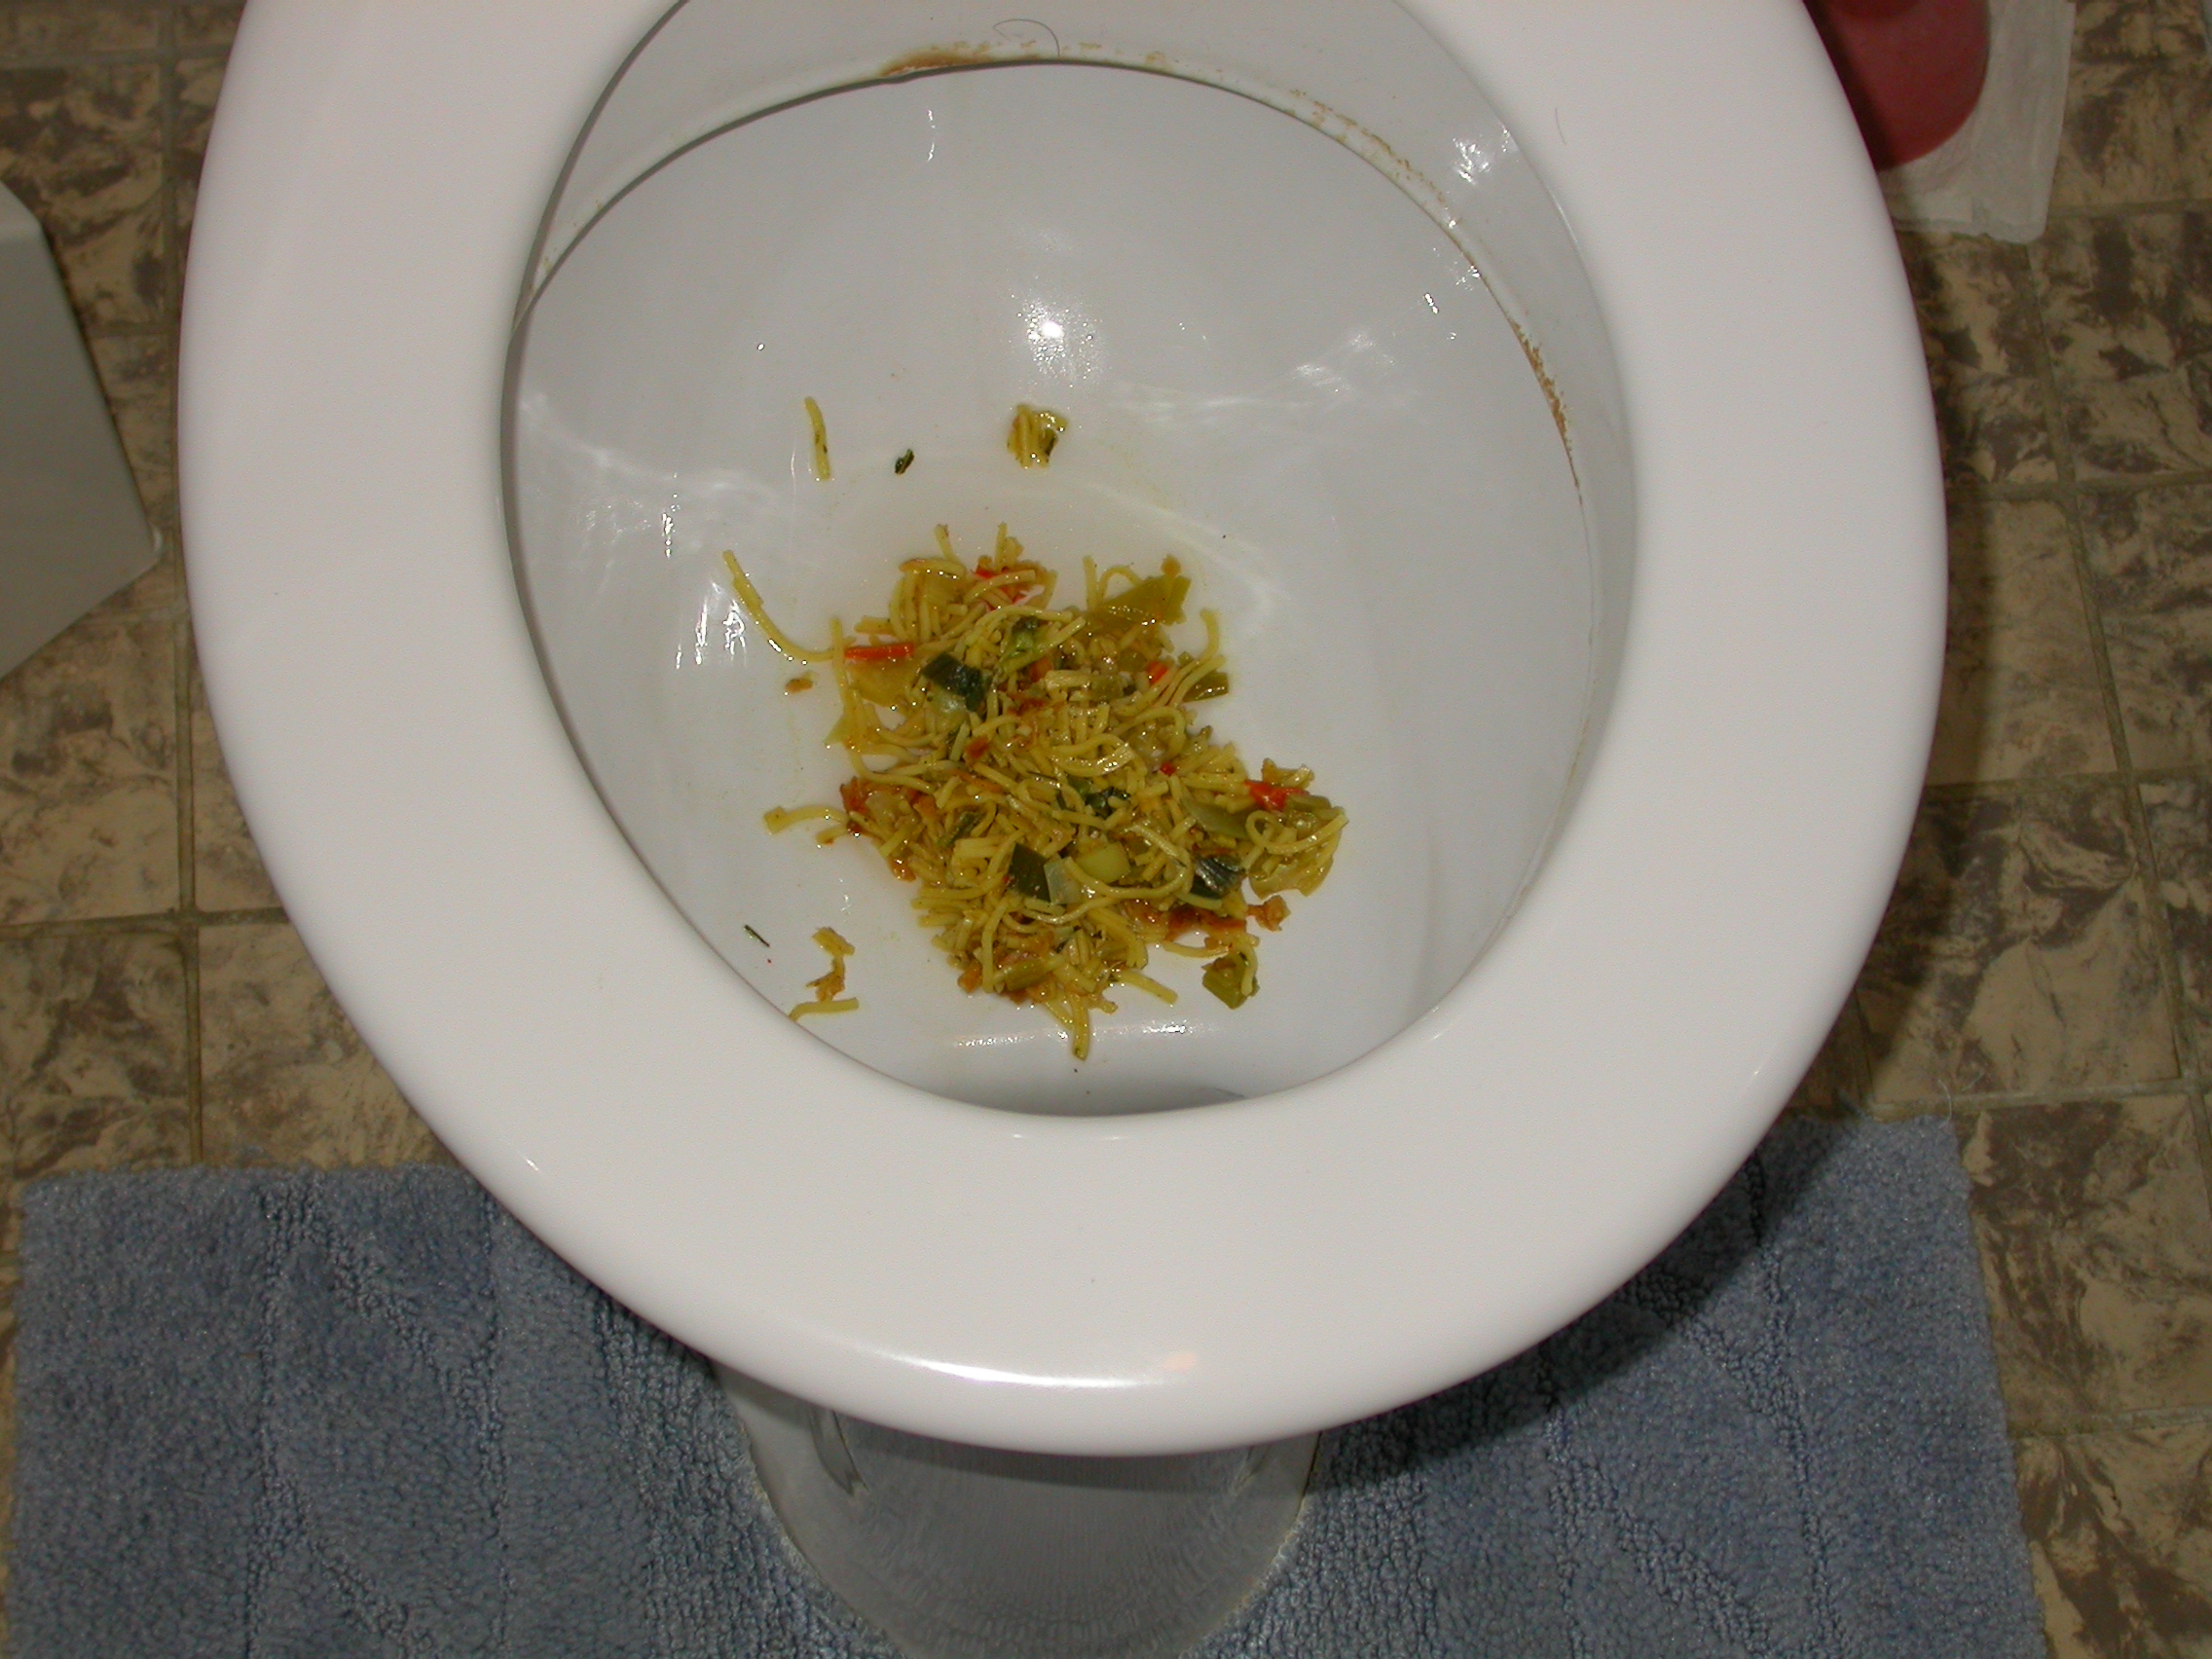 paul spaghetti in a toilet bowl (huh?) puke wc disgusting